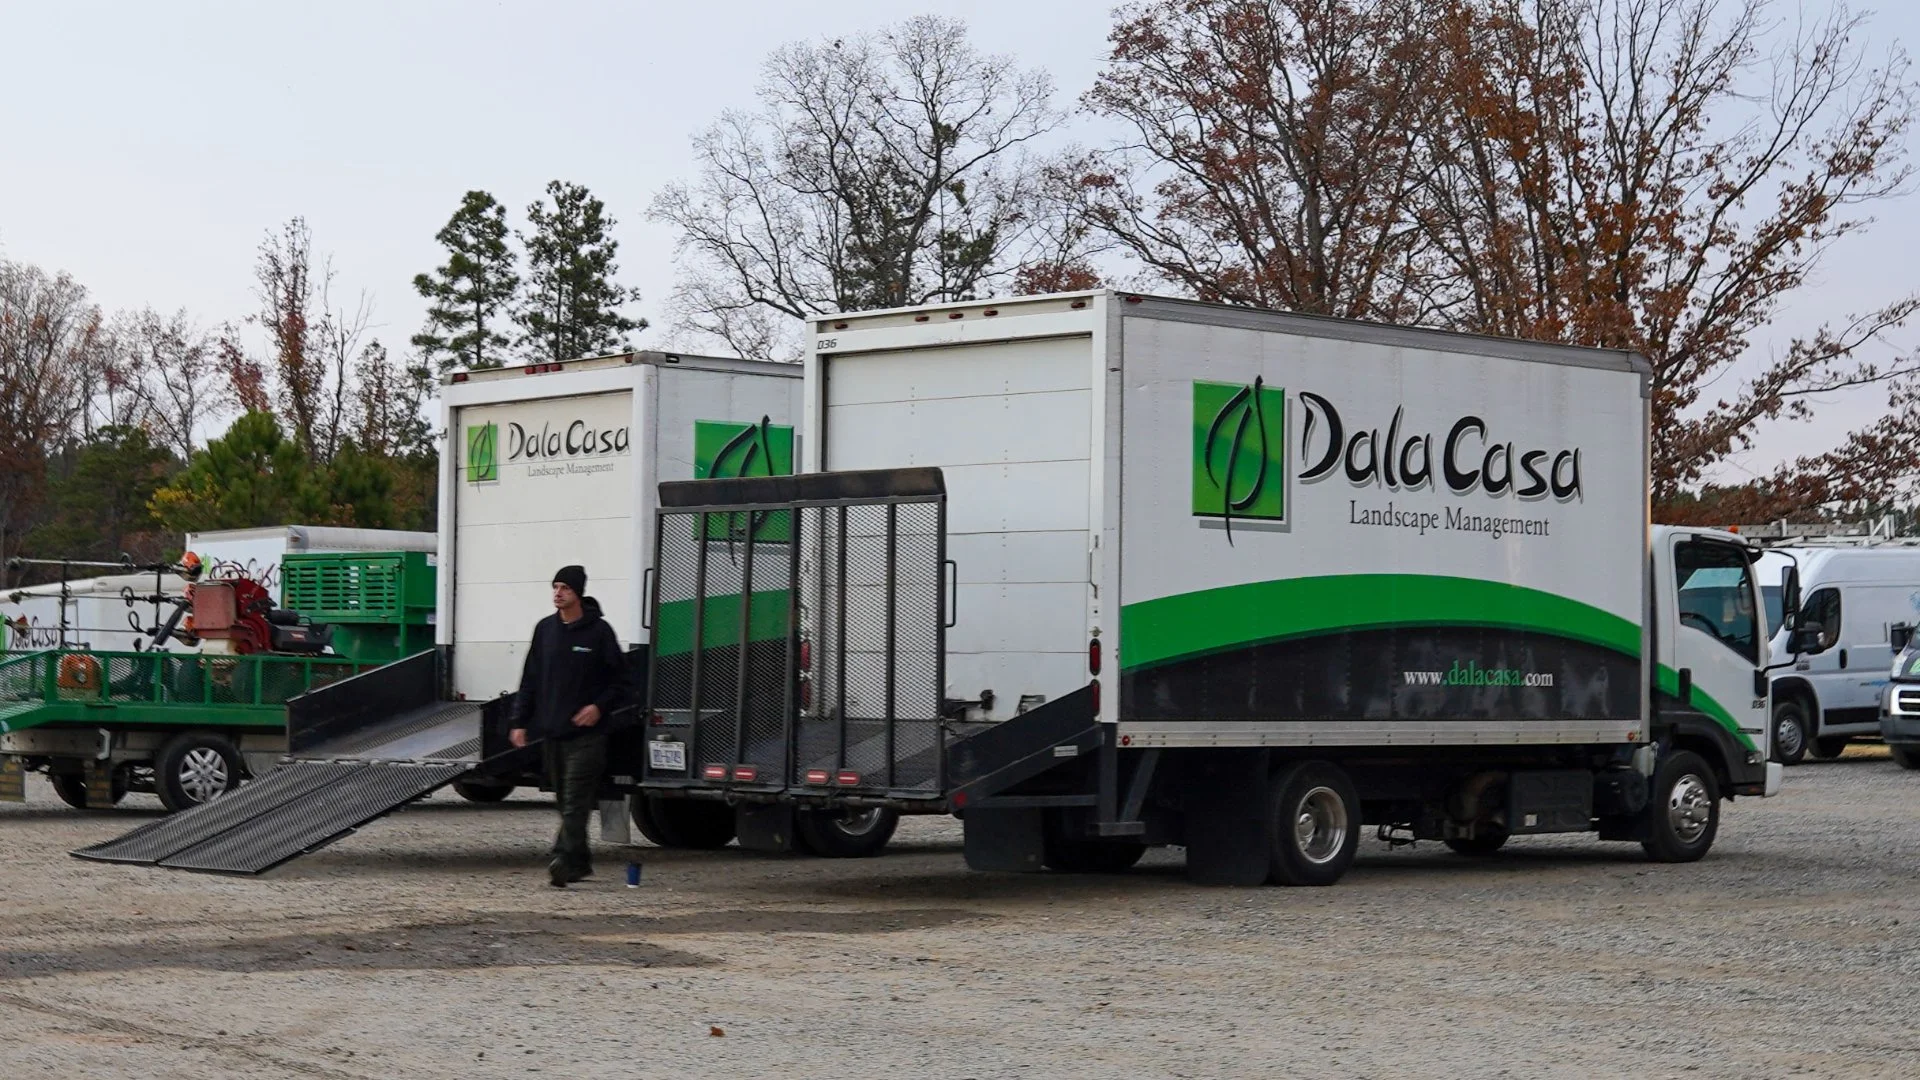 DalaCasa Landscape Management trucks and trailers.